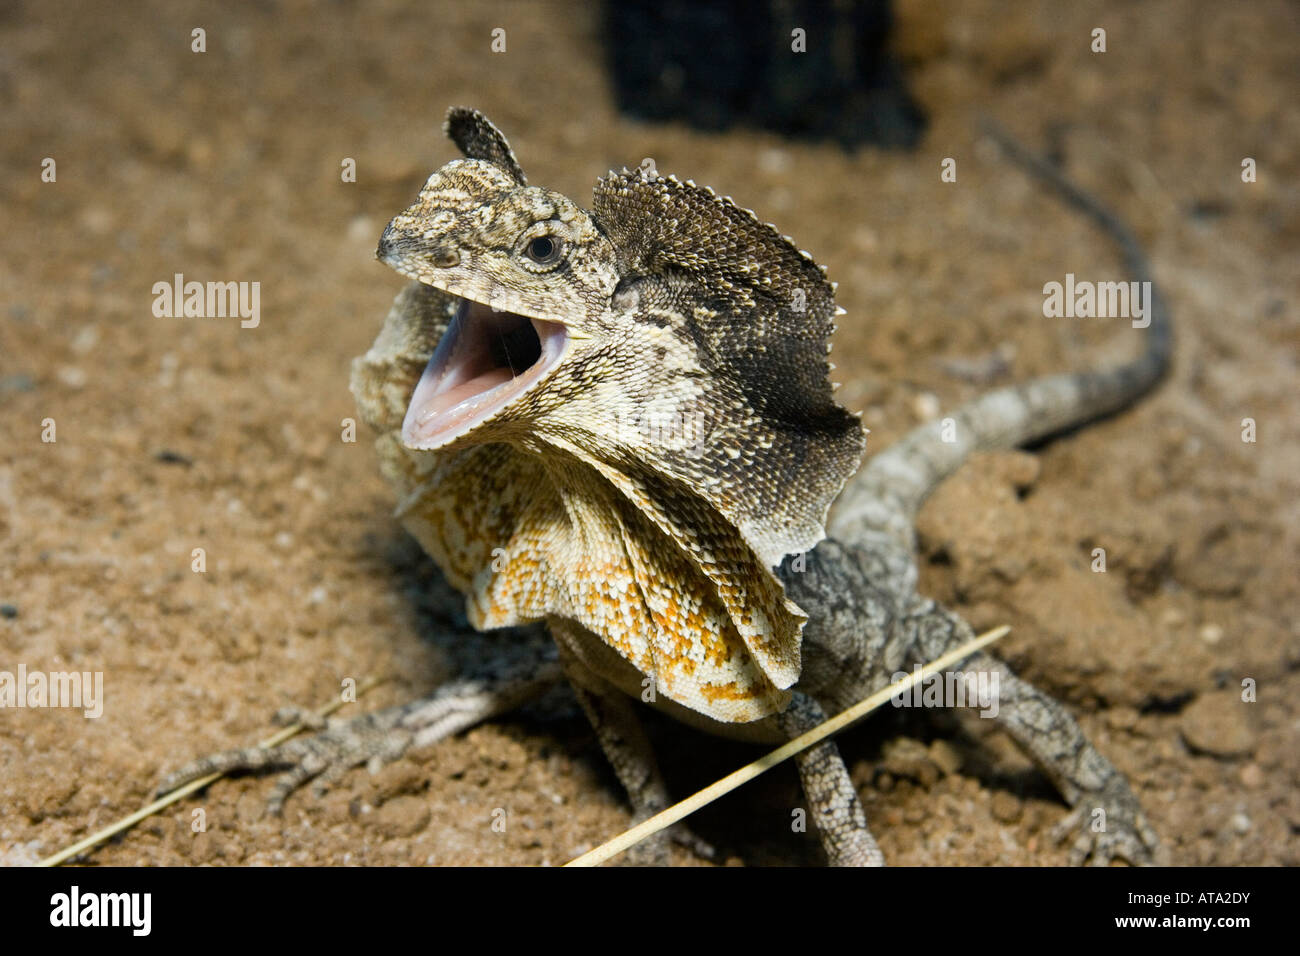 The threat display of the frilled lizard, Chlamydosaurus kingii, Australia. Stock Photo